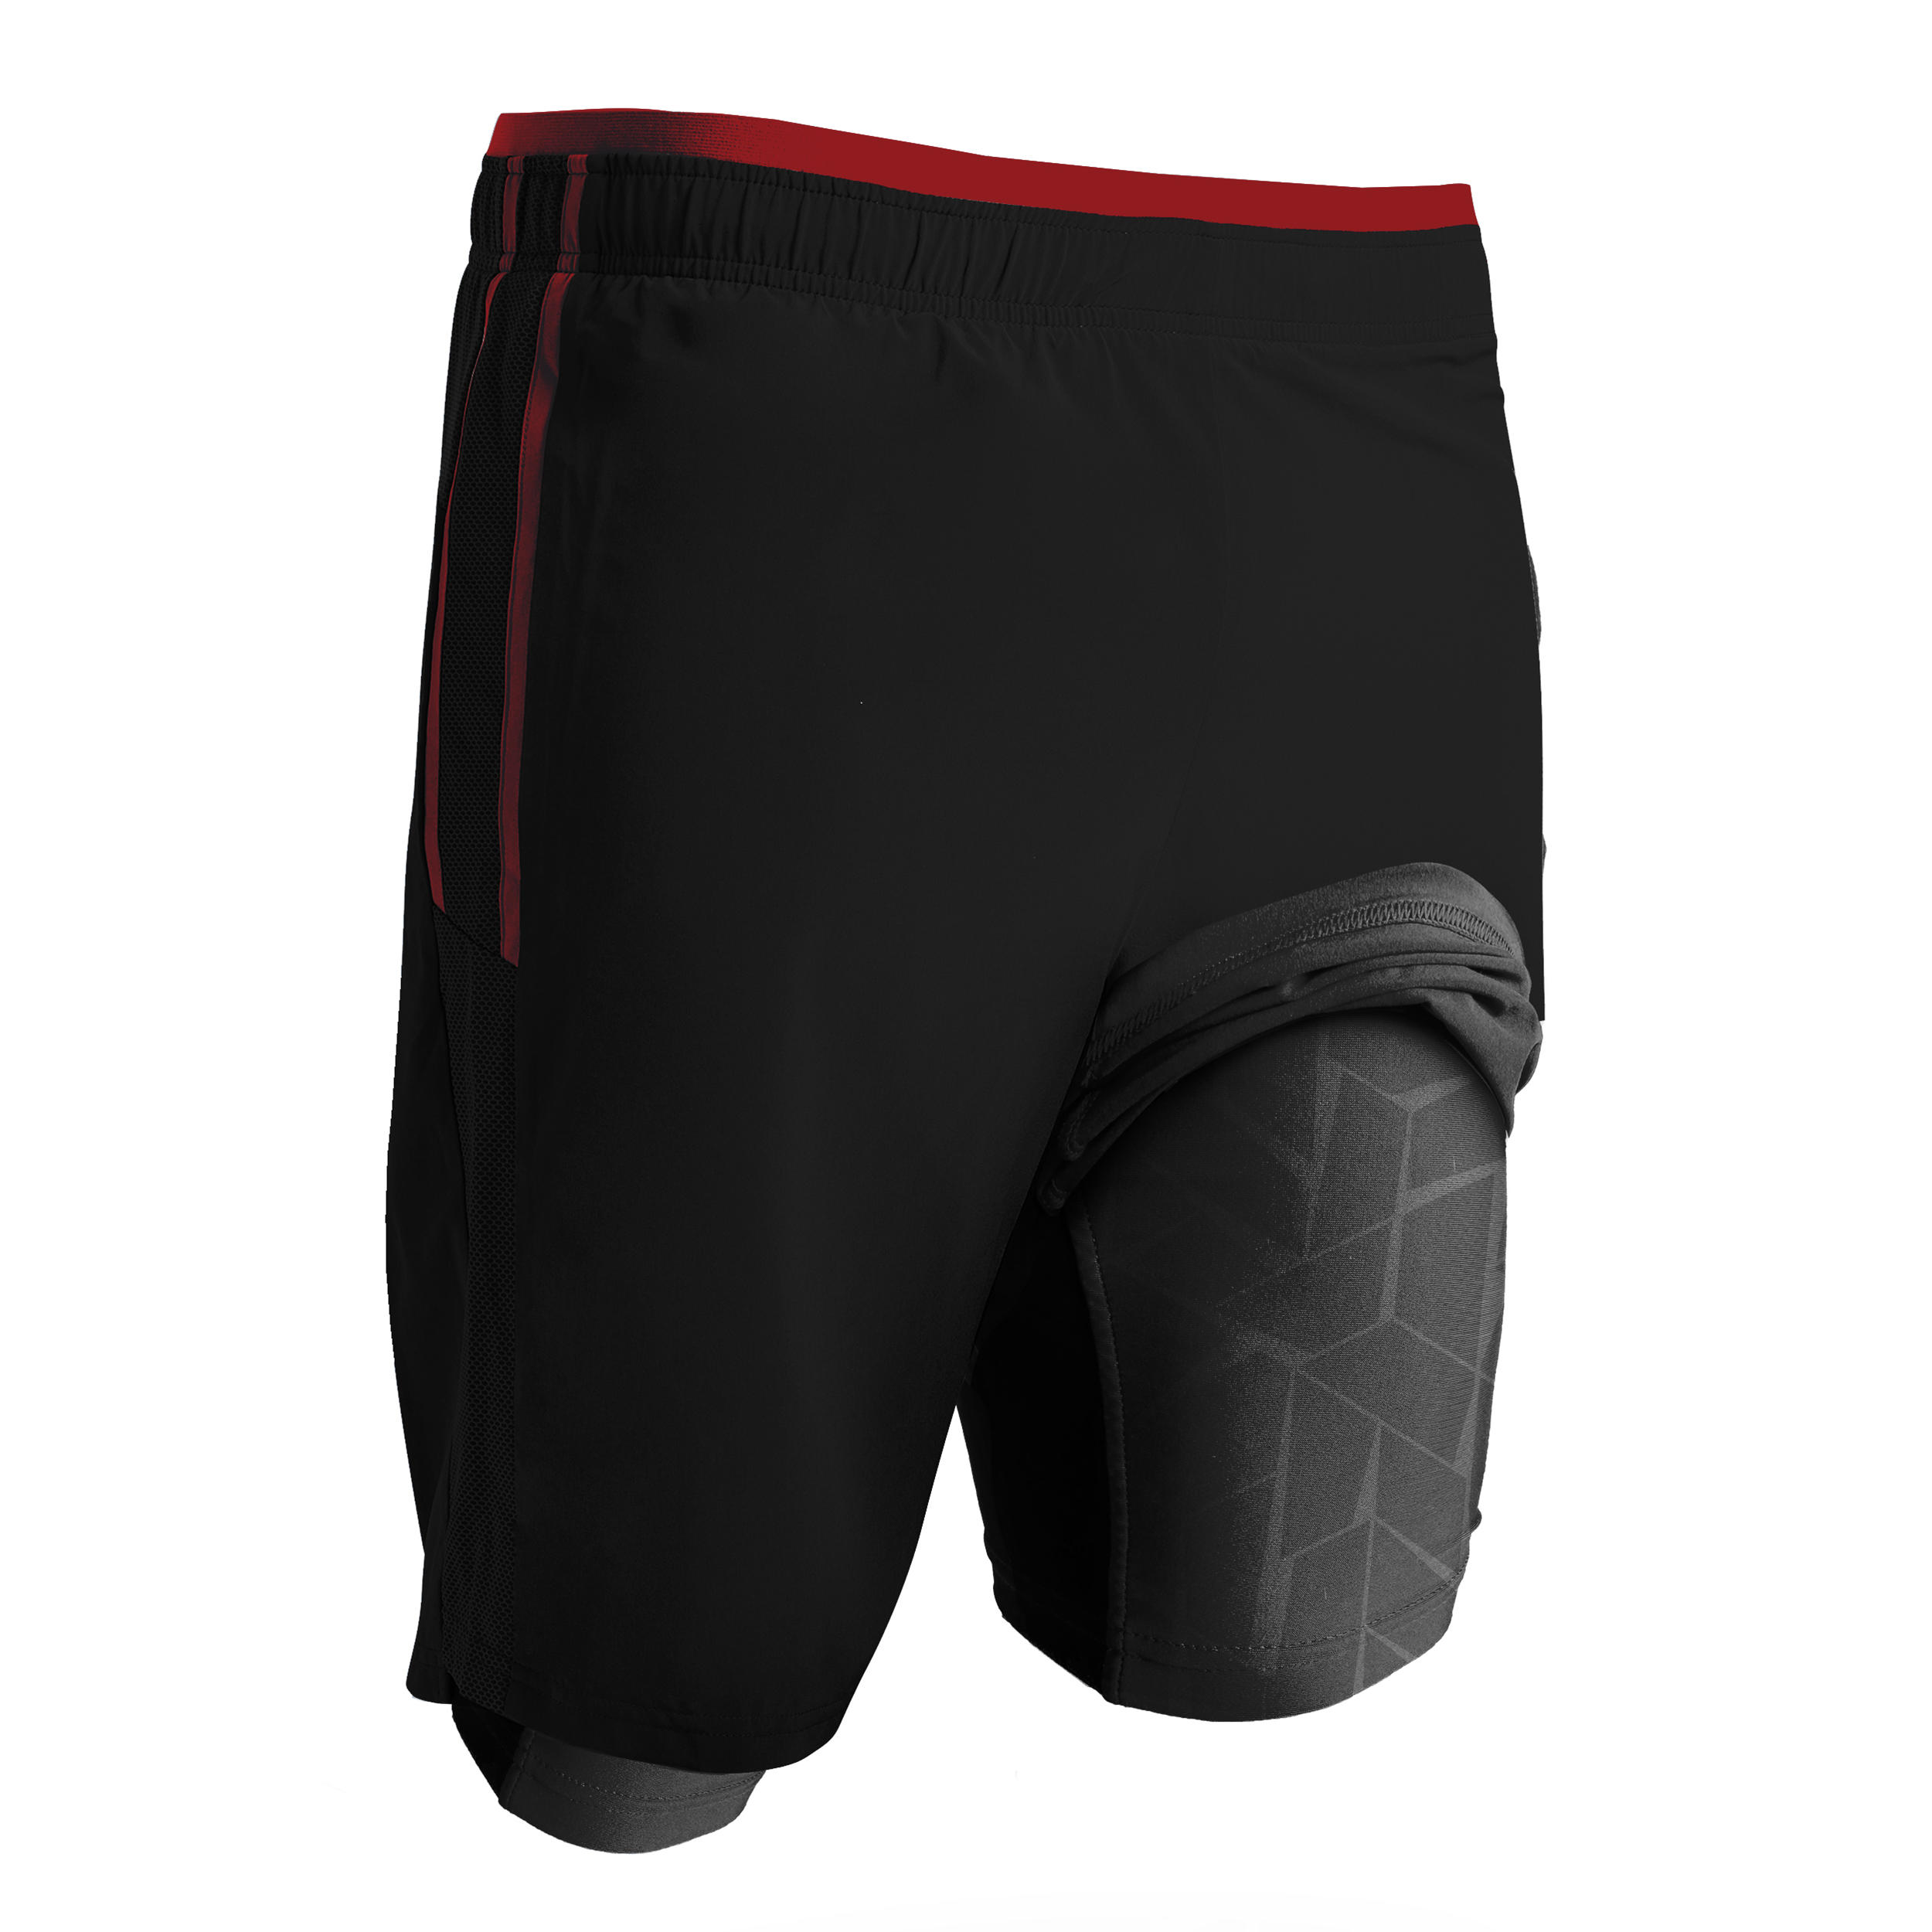 KIPSTA Adult 3-in-1 Football Shorts Traxium - Black/Red